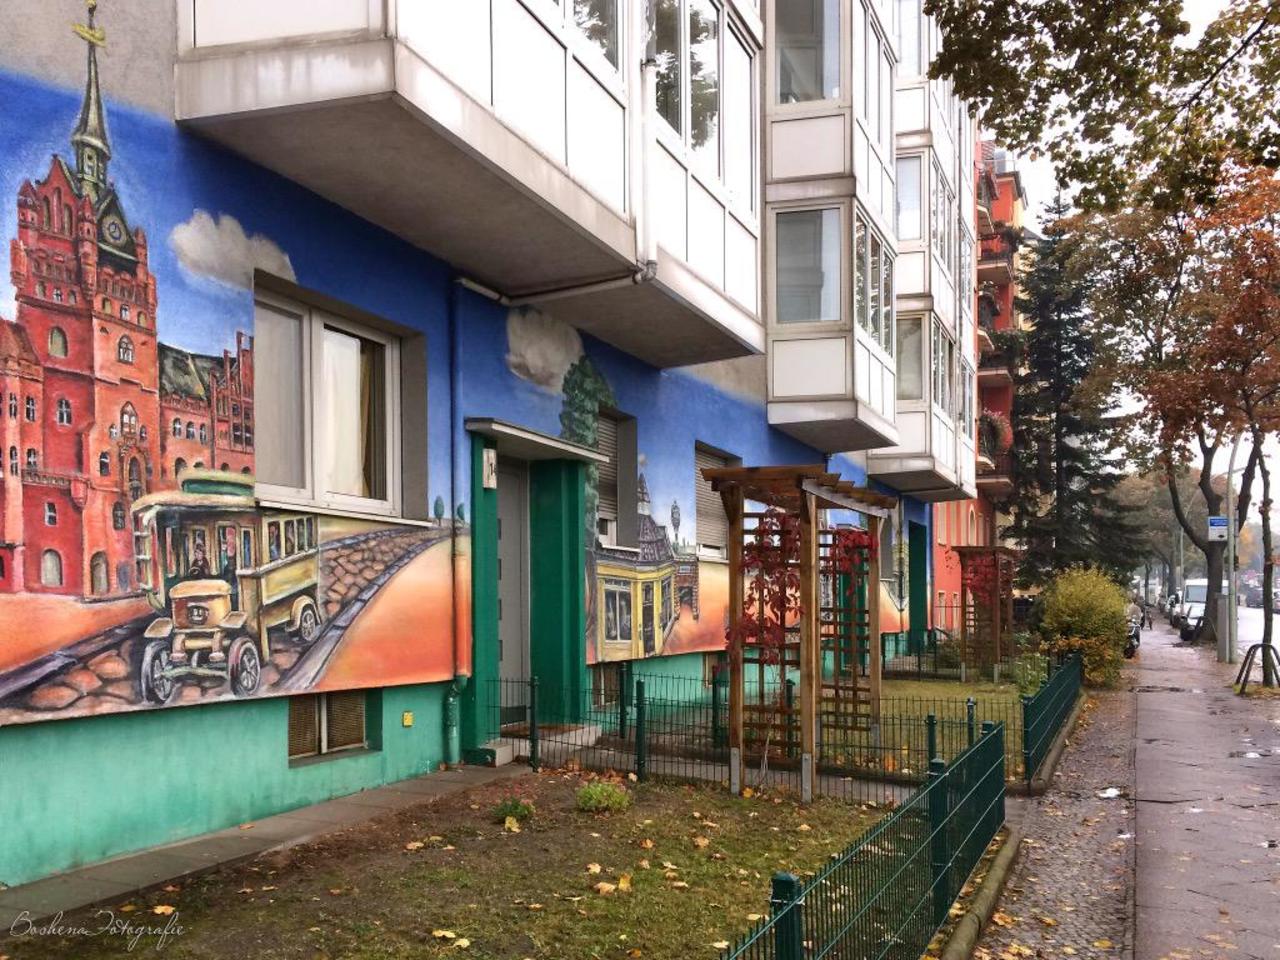 RT @berlinka_lg: Die Straßen der Hauptstadt
Hier:Wandmalerei in #Berlin #Steglitz
#streetart #Graffiti
@stadtleben @I_love_Berlin http://t.co/cGiFK9anve